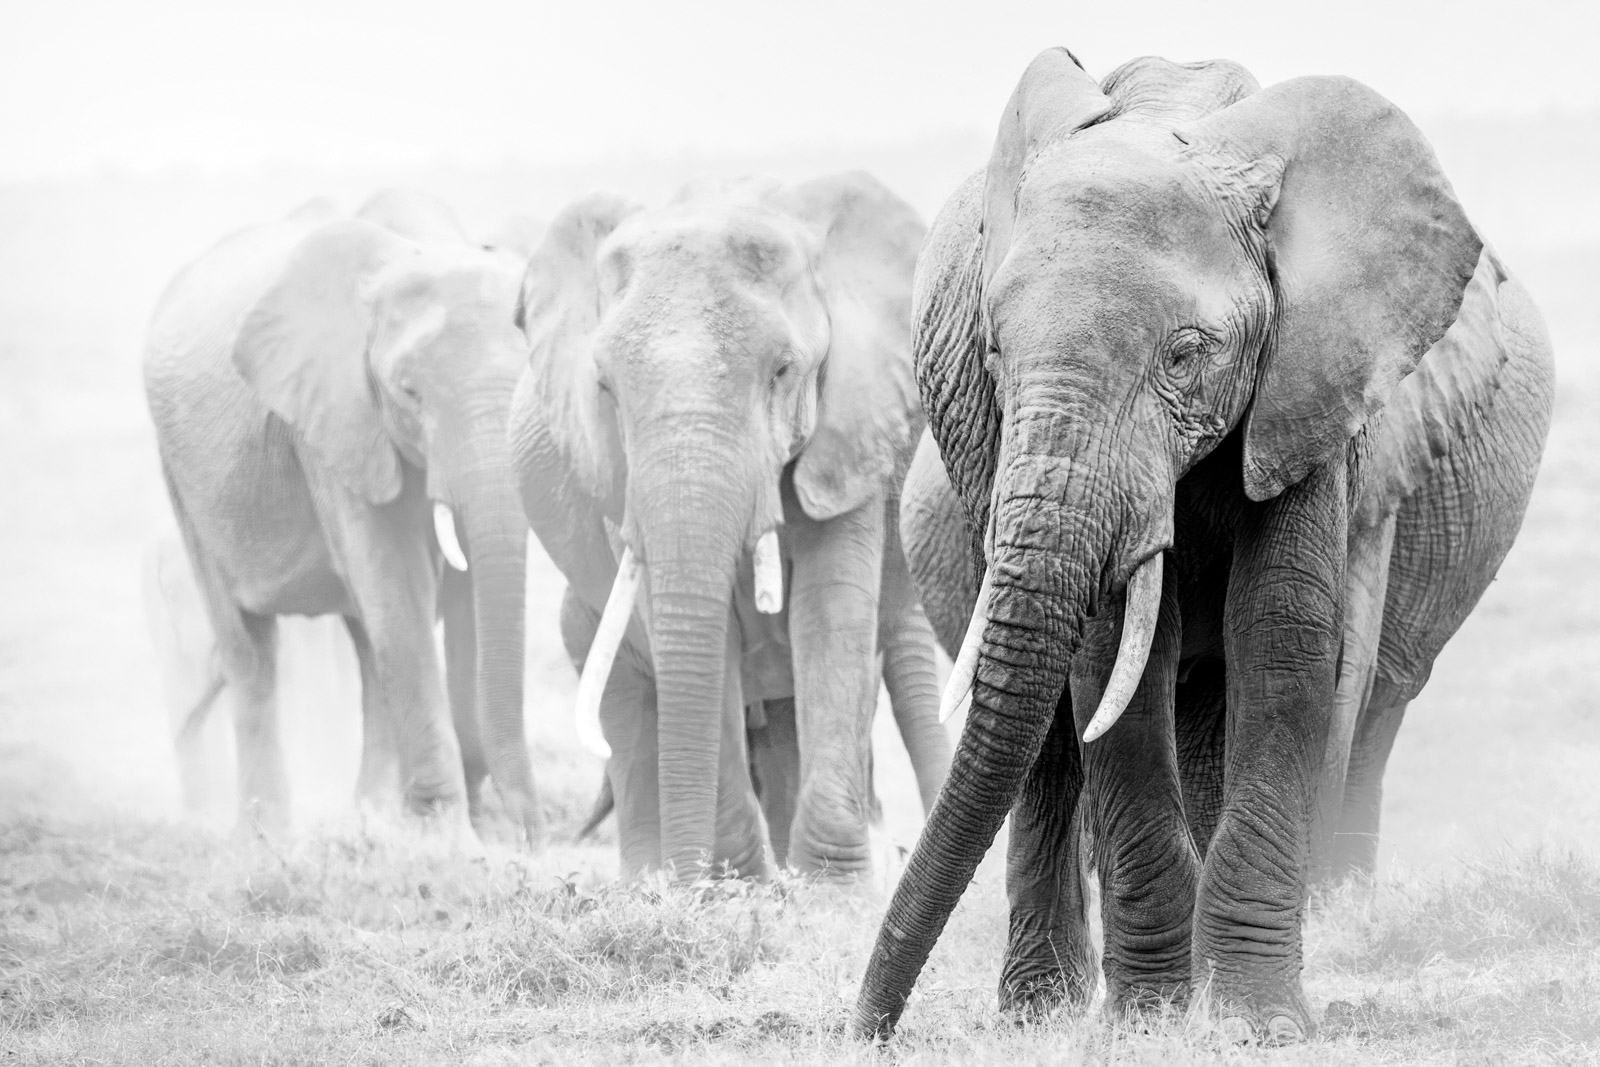 Over exposed elephants for a creative safari photo